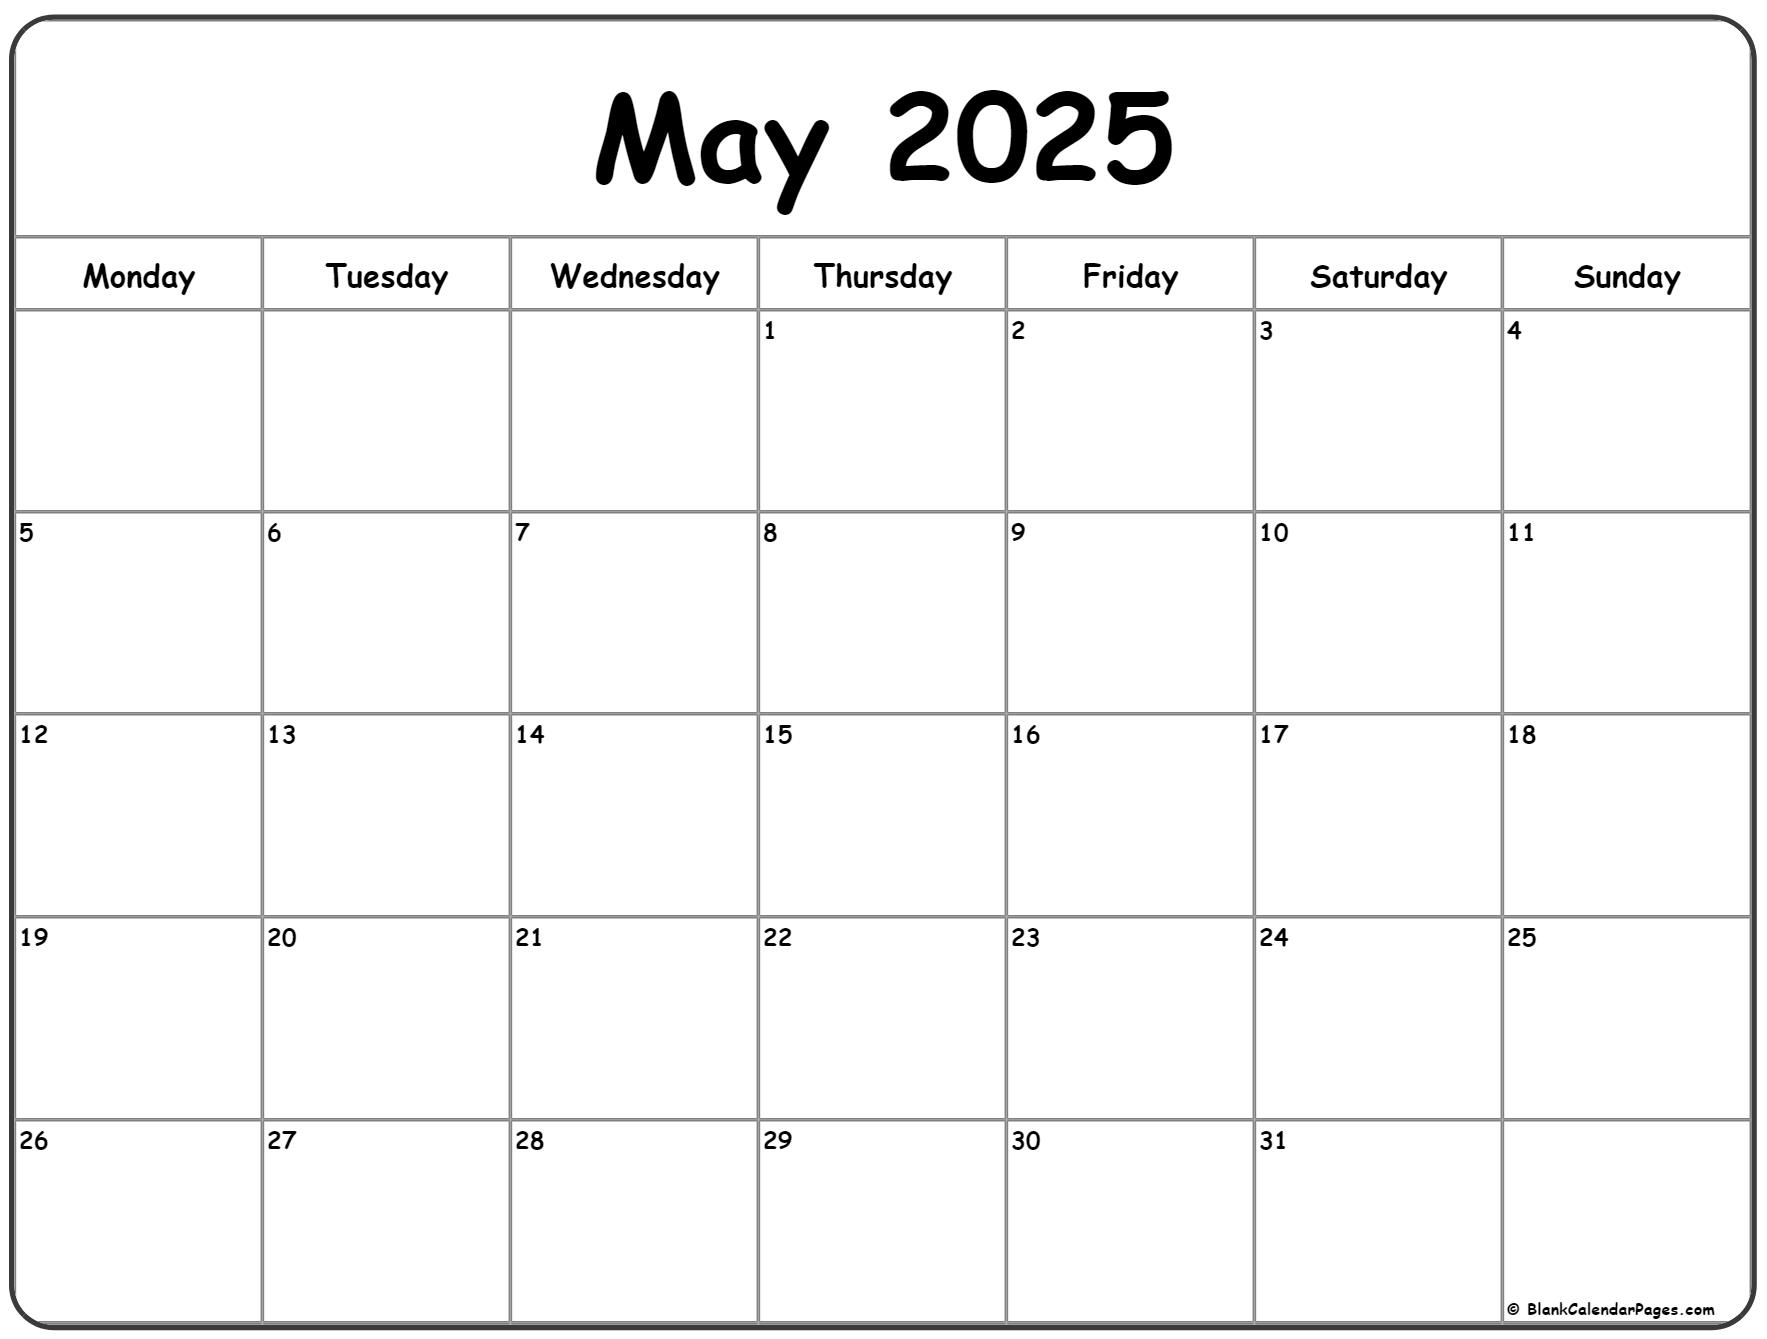 May 2025 Monday calendar. Monday to Sunday